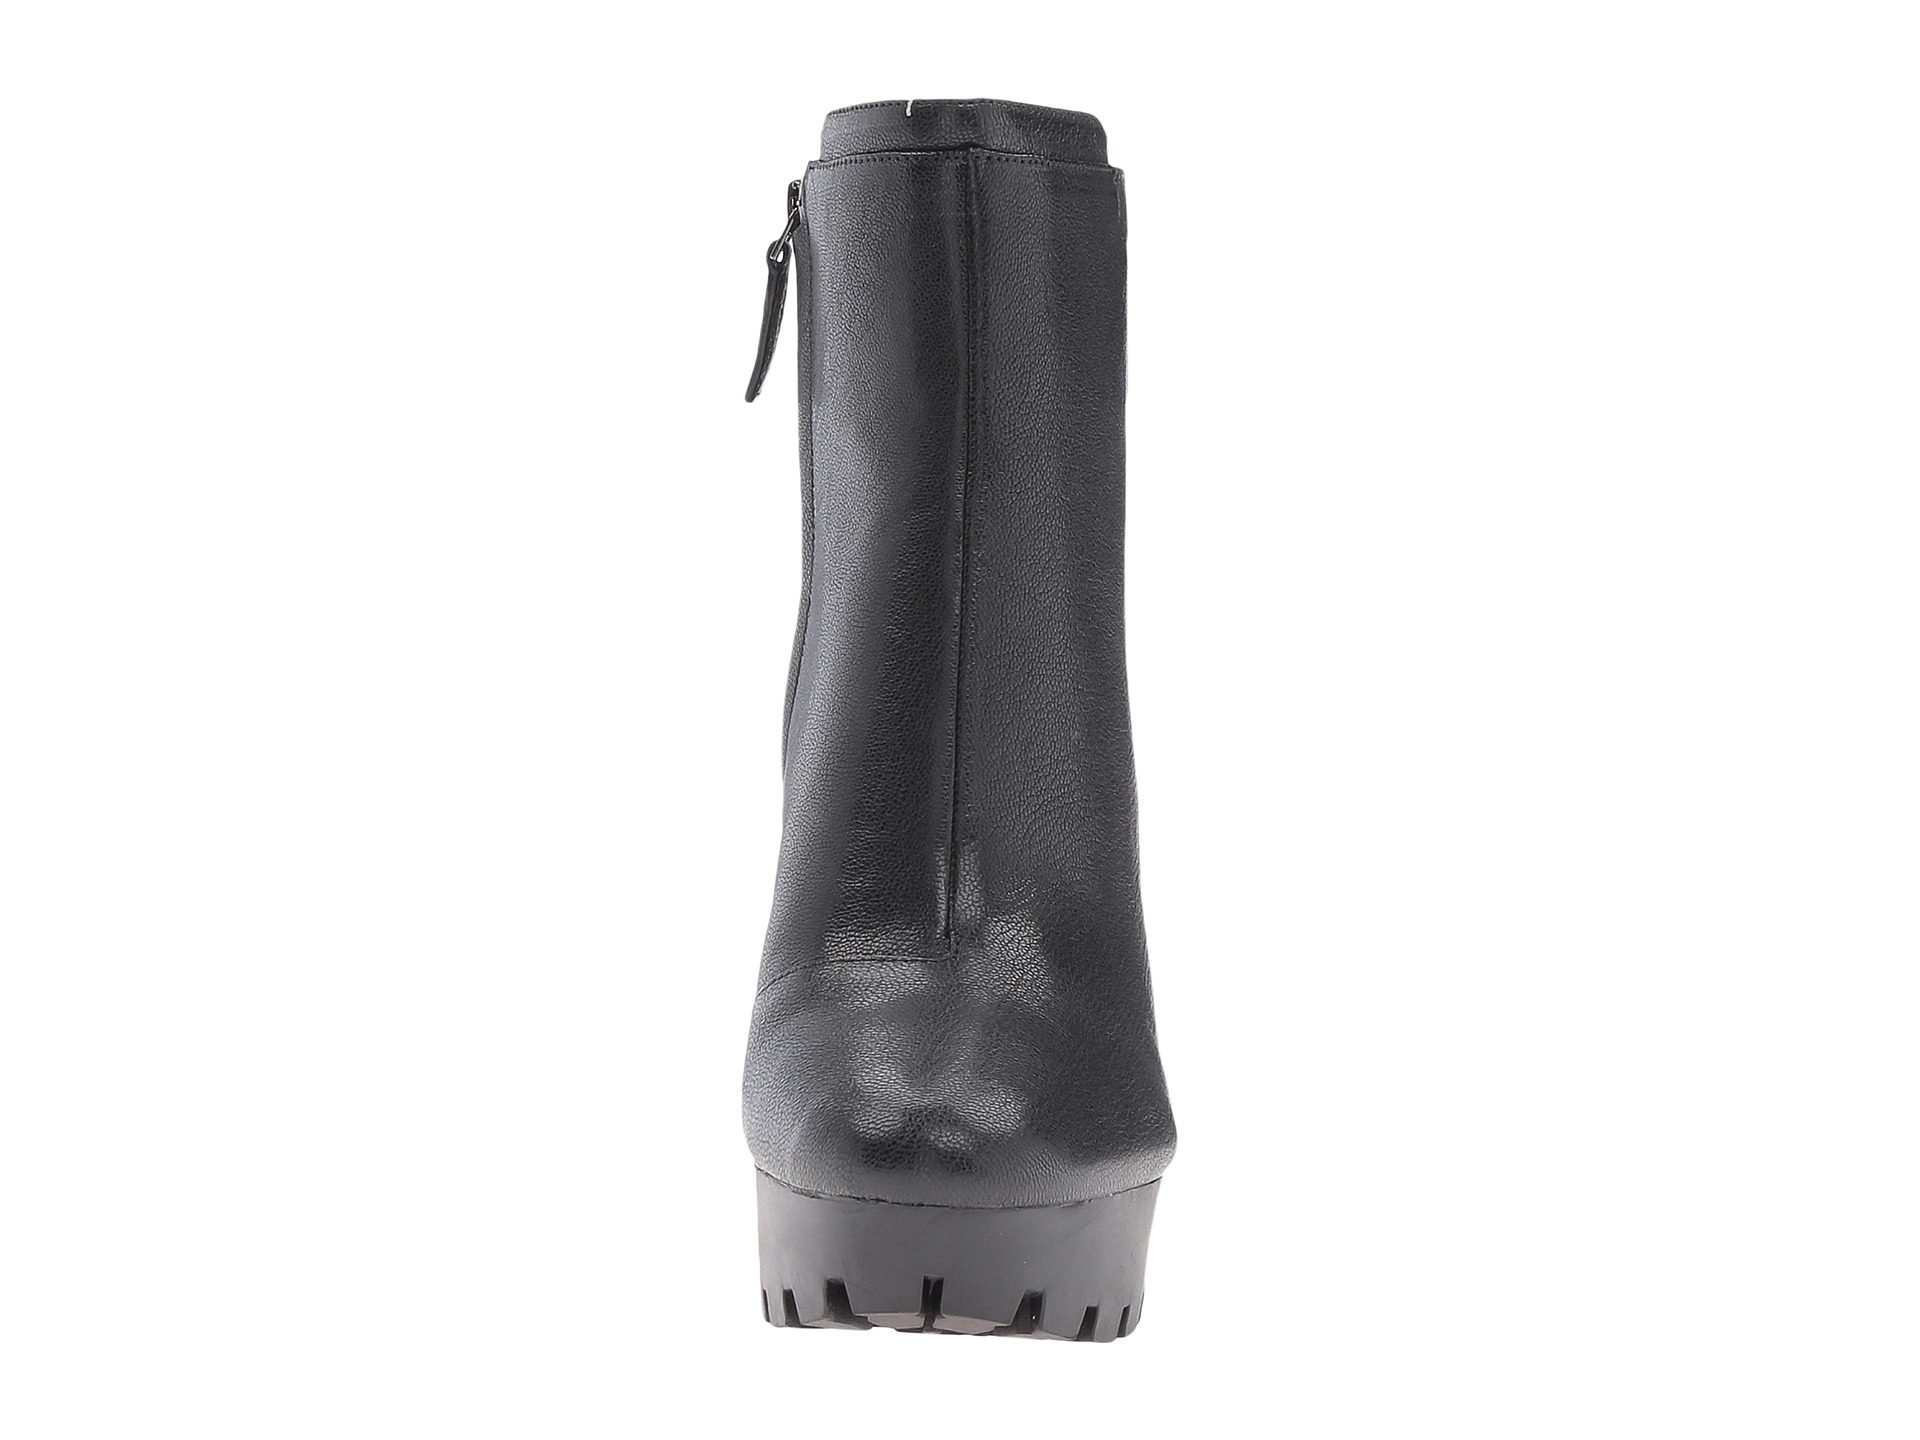 Nine West Xerin Black Leather - Zappos.com Free Shipping BOTH Ways